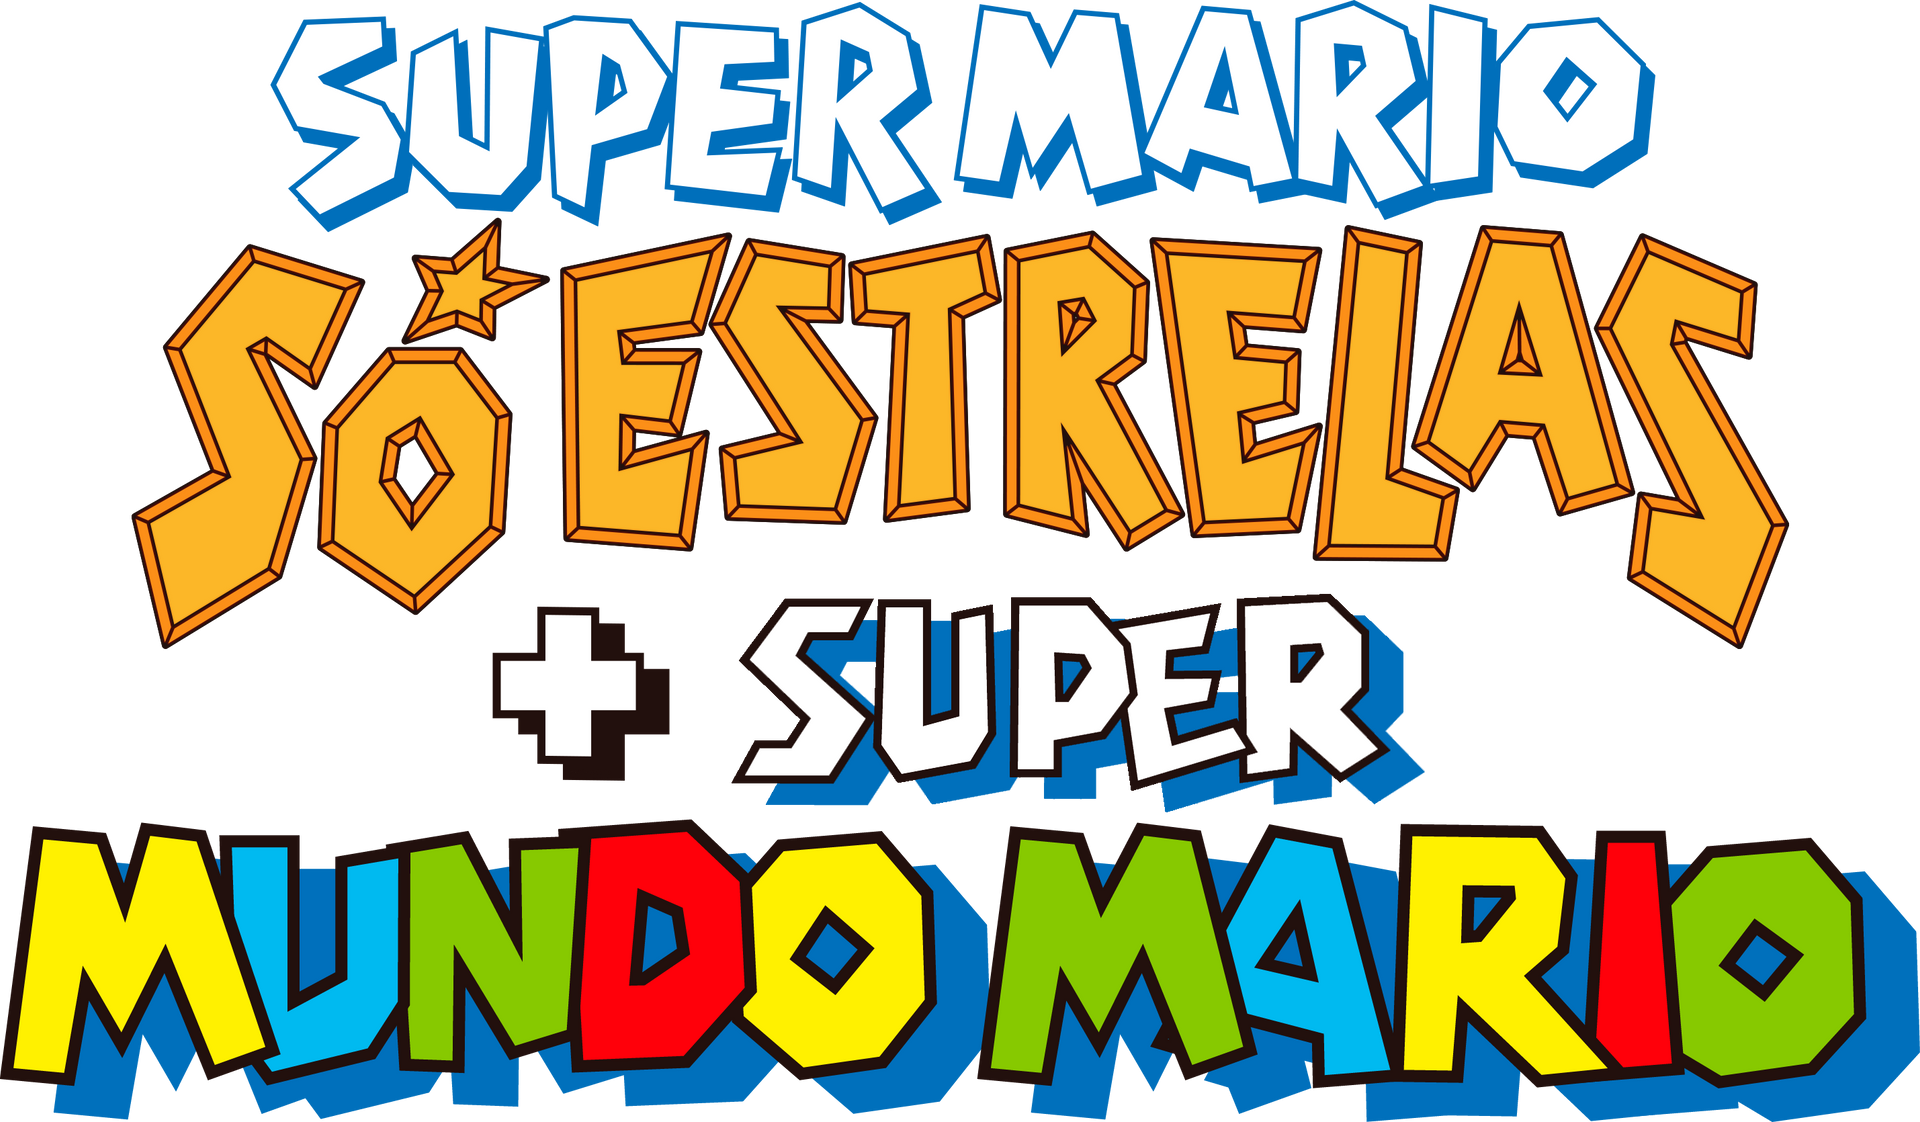 Super Mario All-Stars+World PT-BR Logo (Boxart) by BMatSantos on DeviantArt